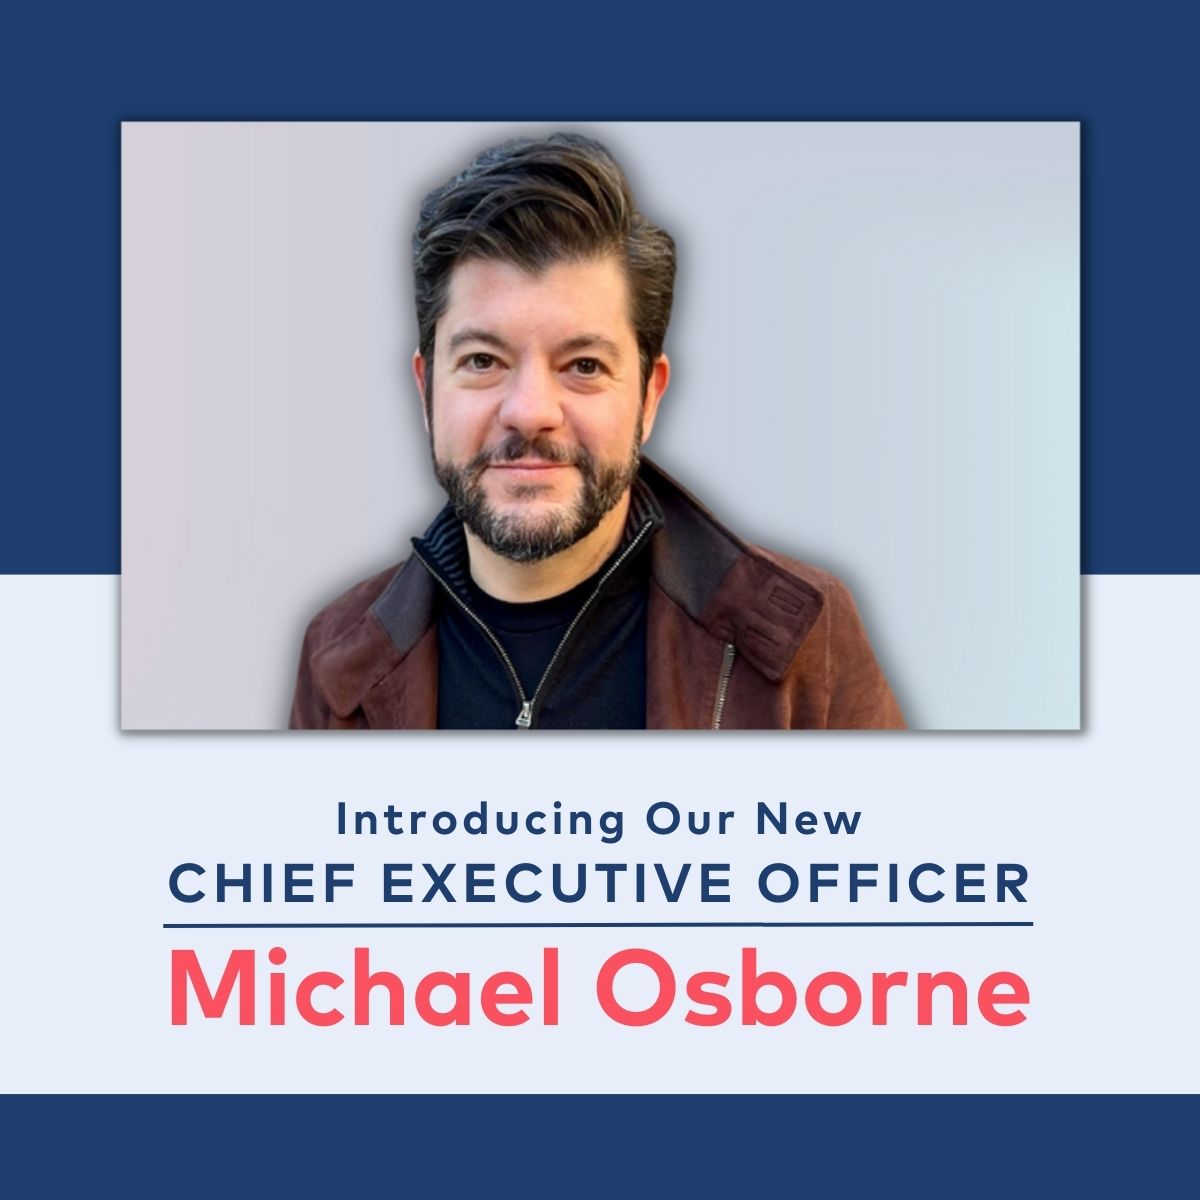 Appriss Retail's new CEO Michael Osborne